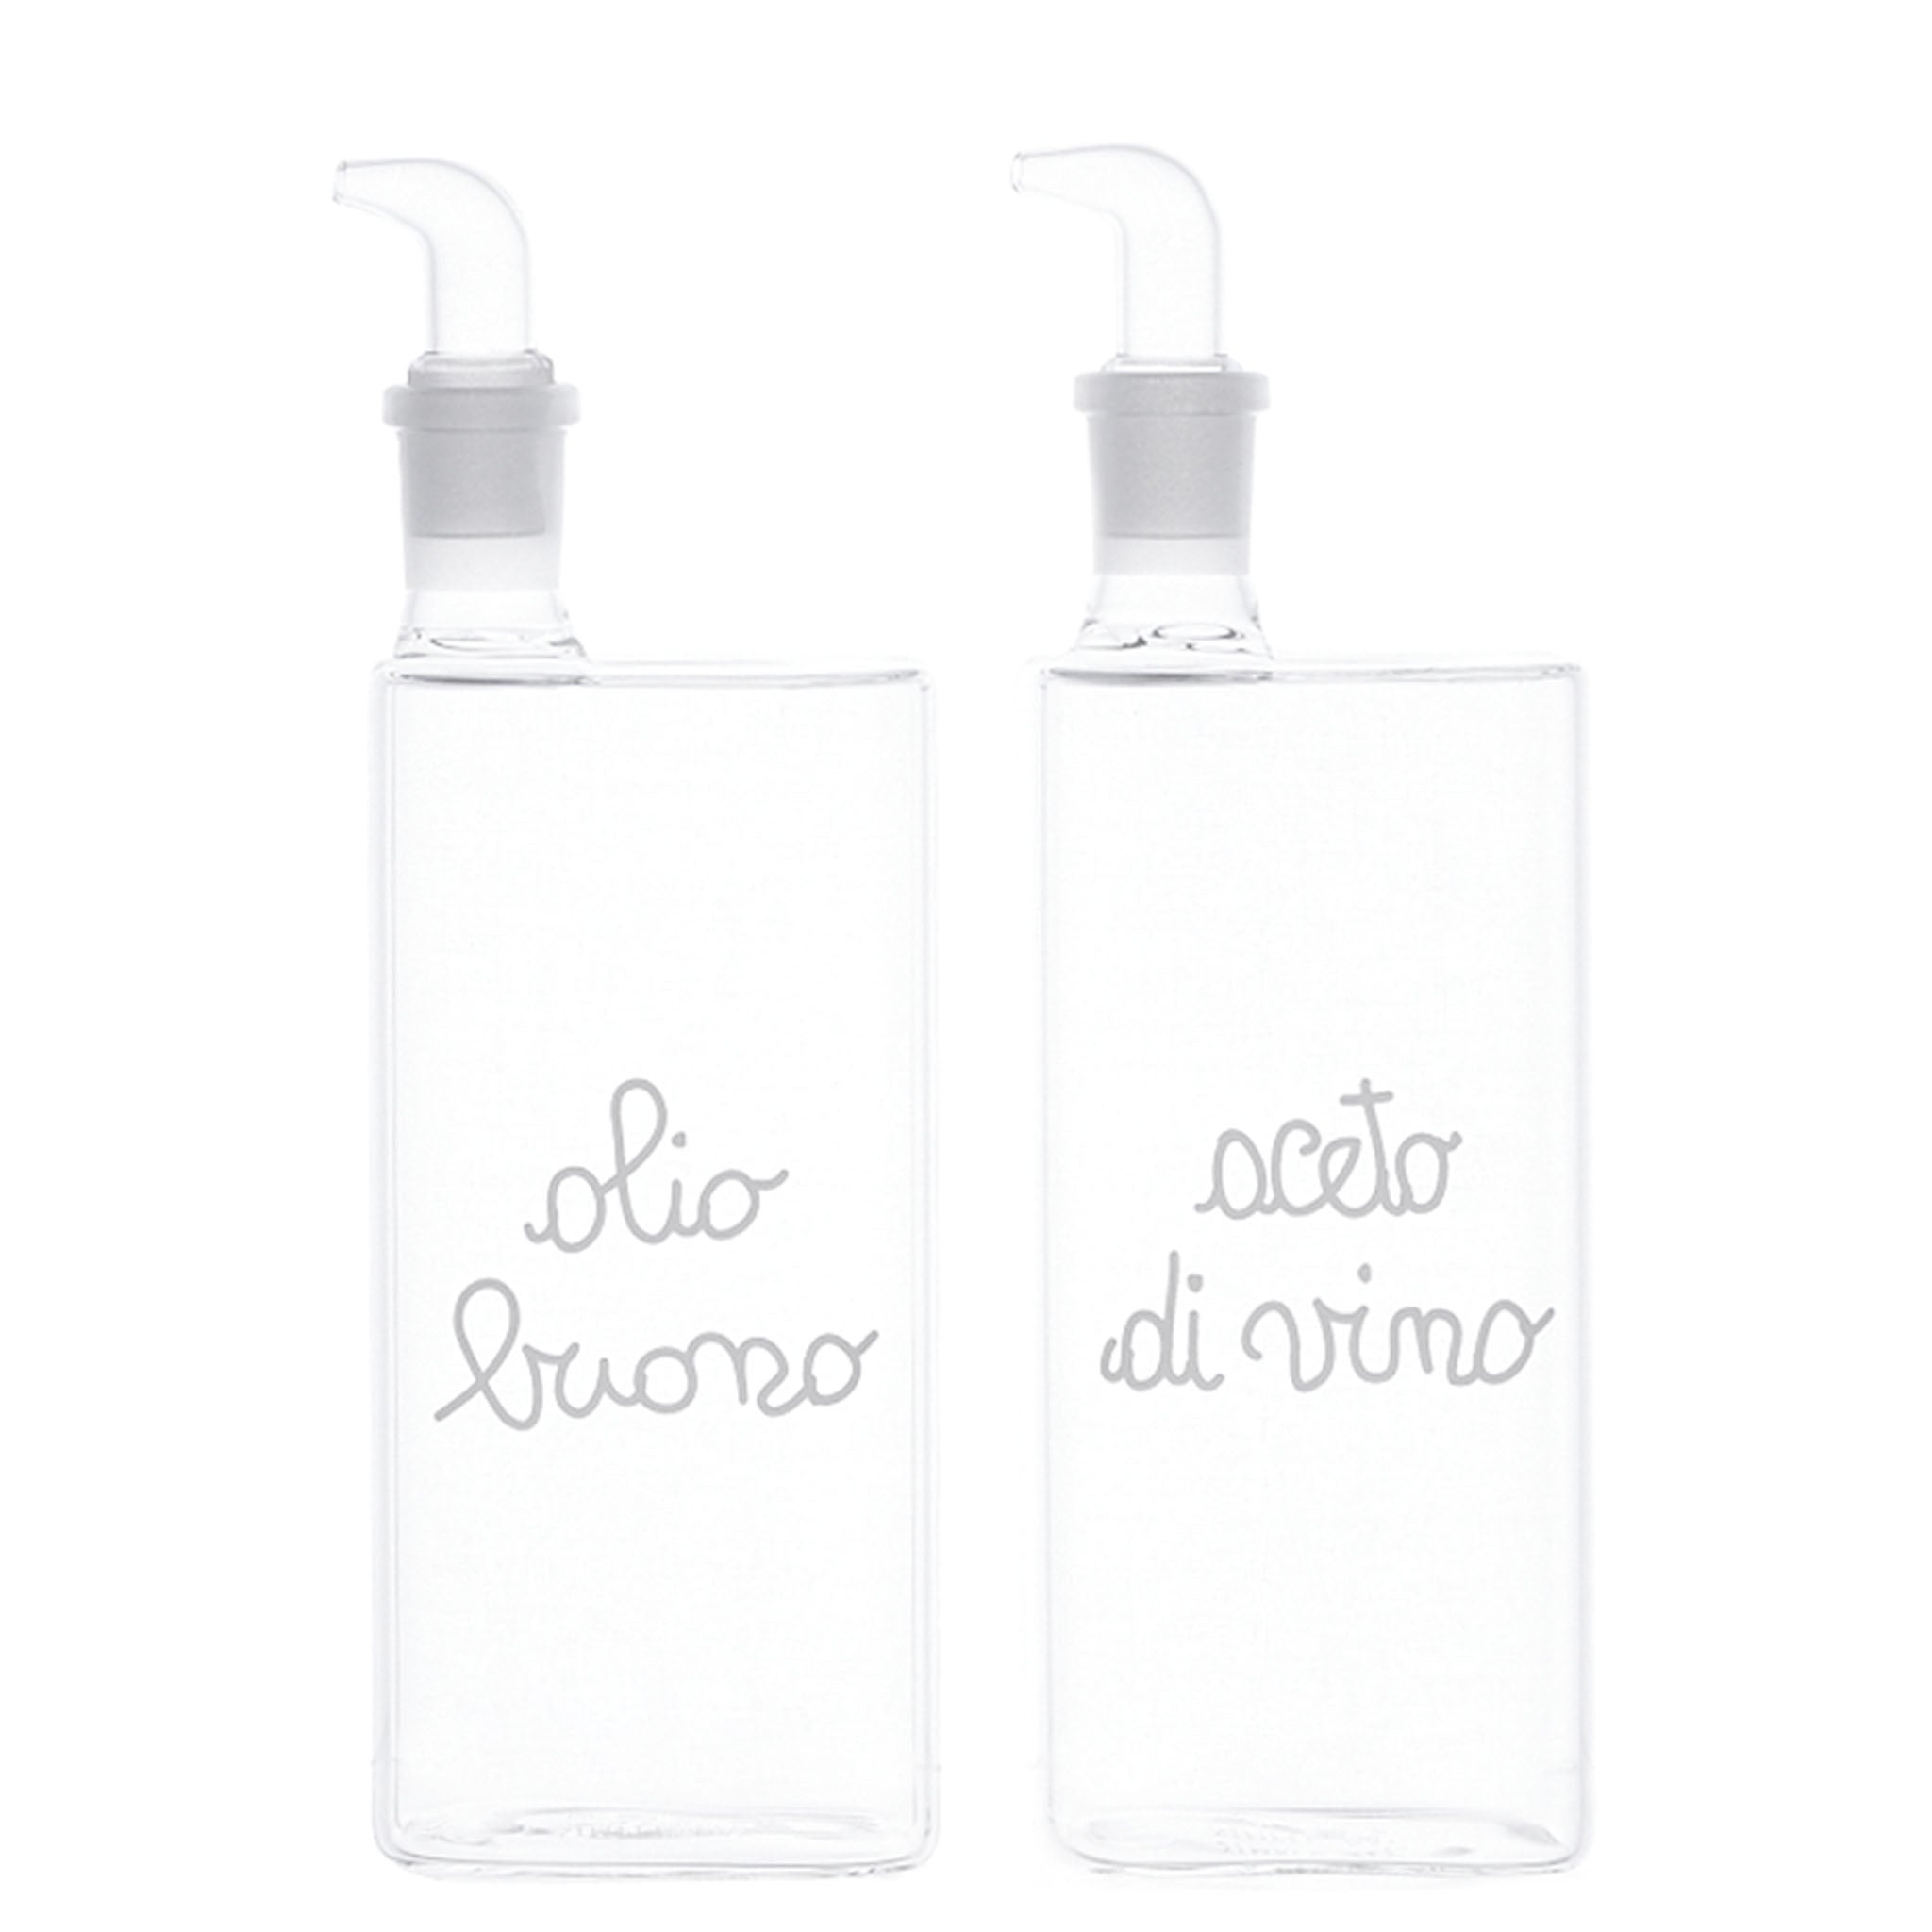 Olio Buono / Aceto Di Vino Oil & Vinegar Bottle Set, 400 ml